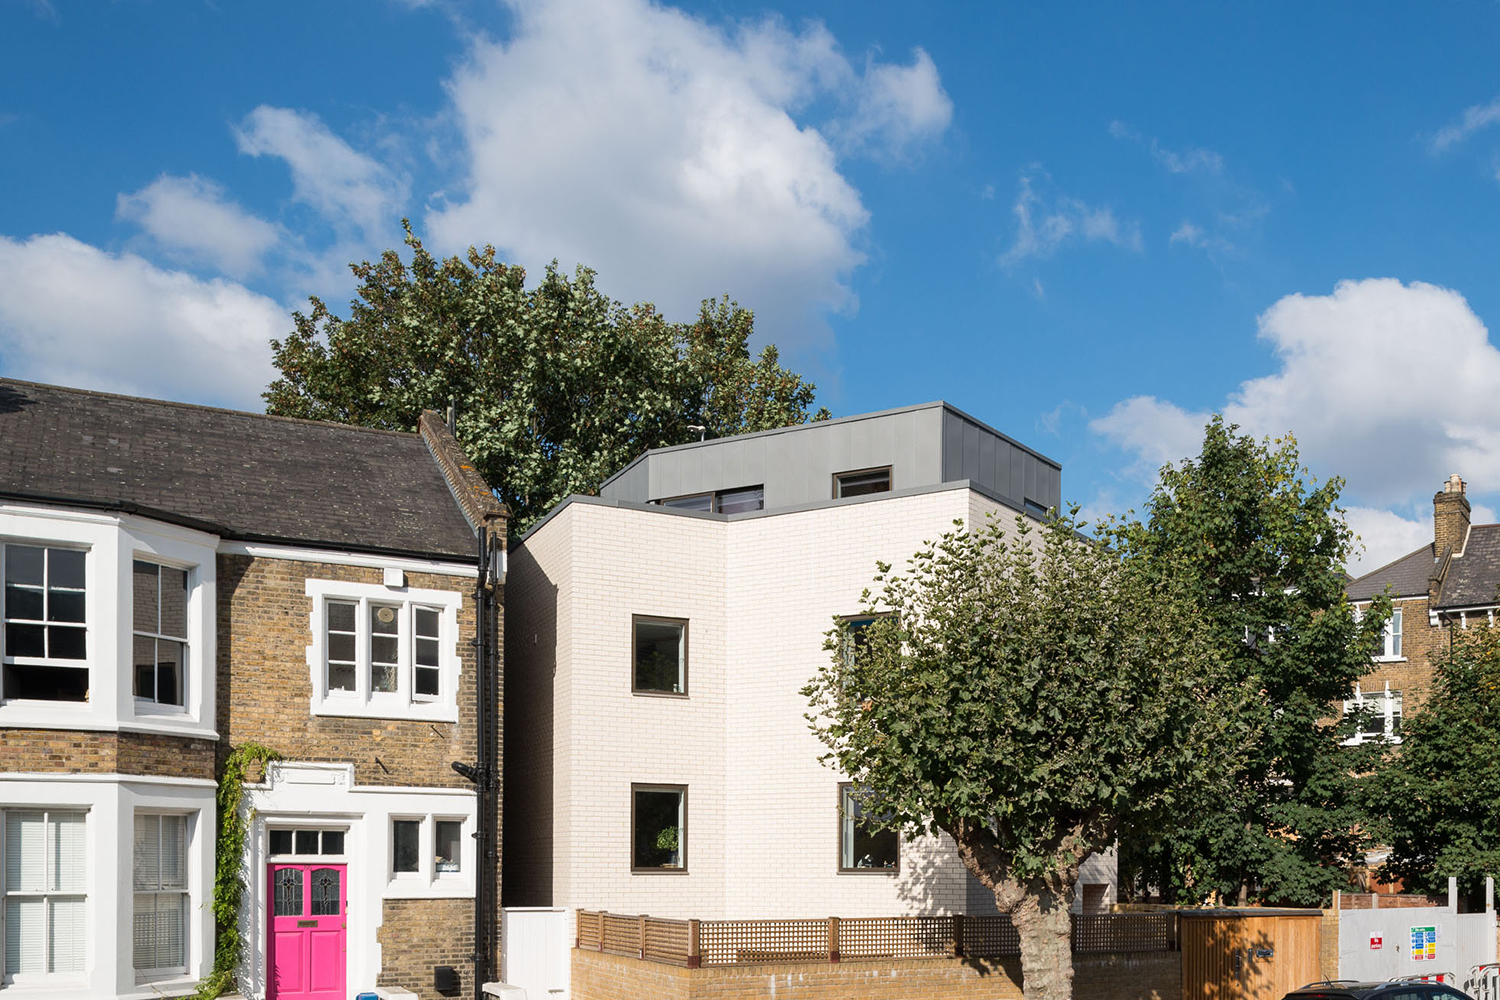 Kyverdale-Hackney-House-N16-Prewett-Bizley-Architects-grand-designs-35.jpg